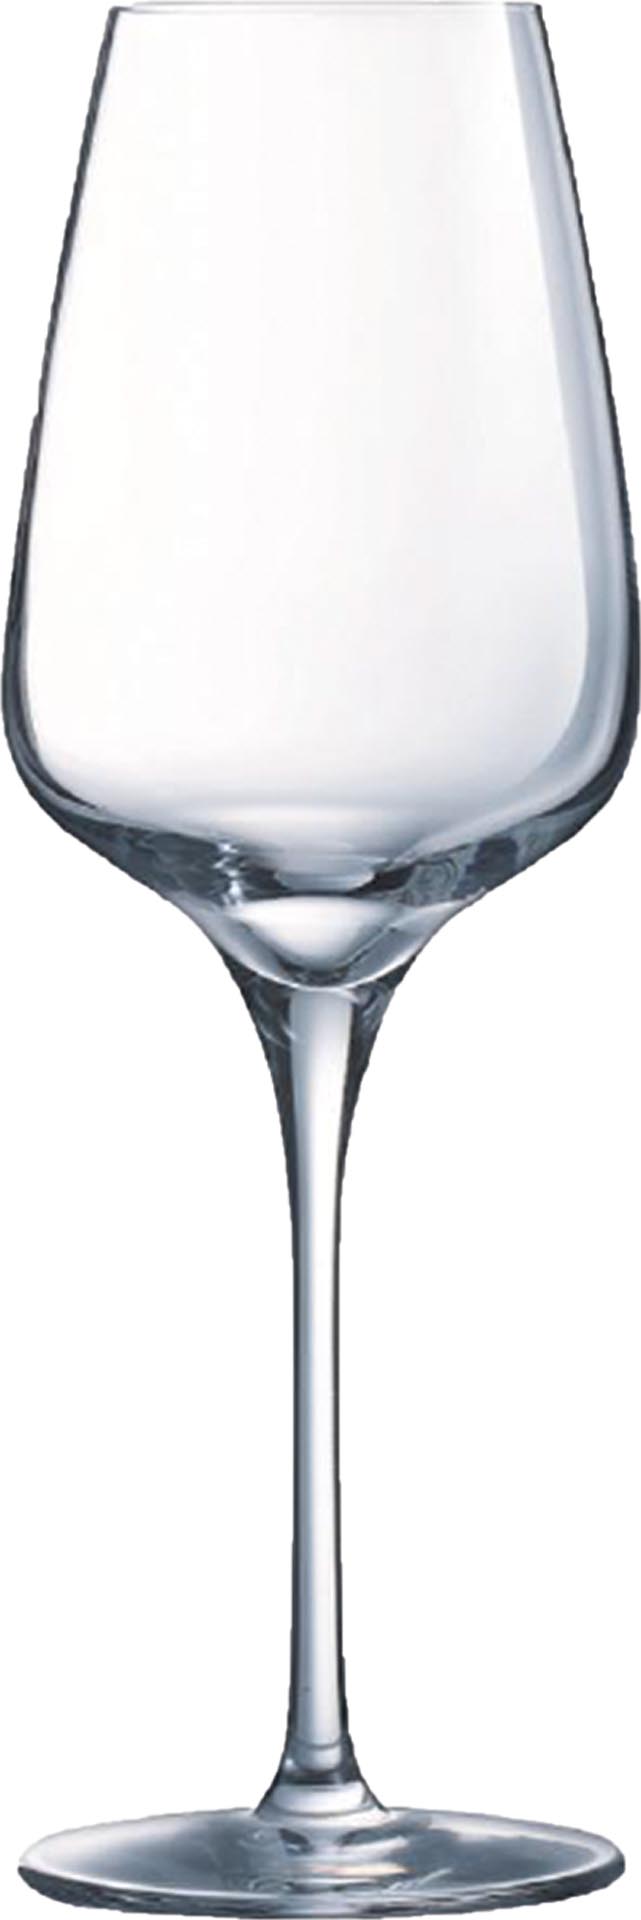 Glasserie "Sublym" Weinglas 55cl /-/ S.104